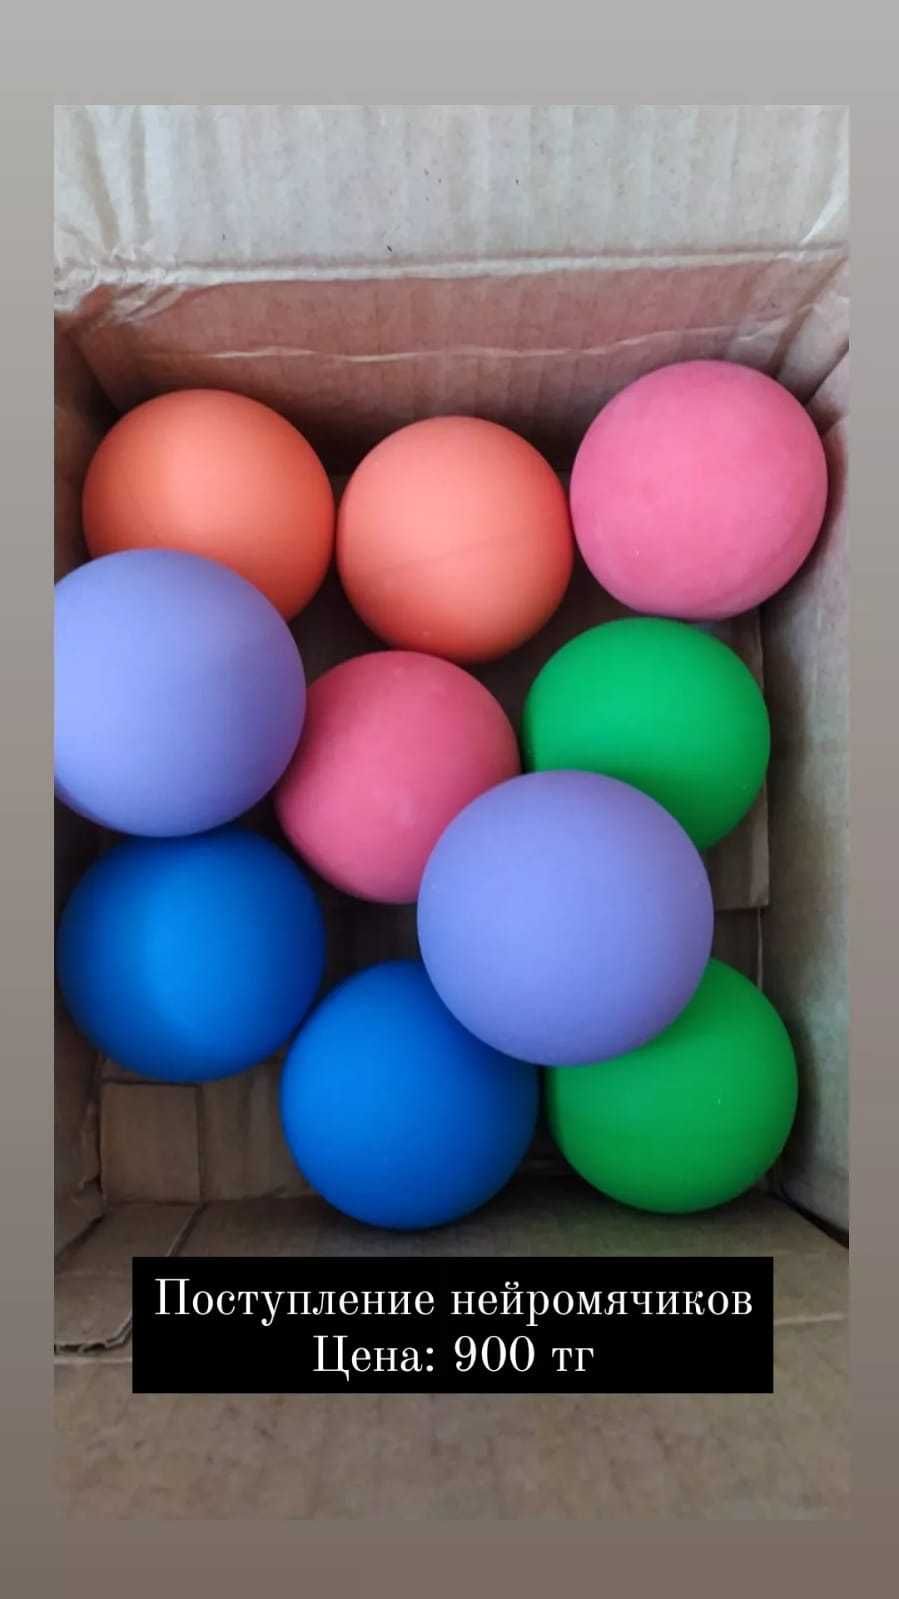 Нейро мячики или кинезиологические мячи, диаметр 6 см